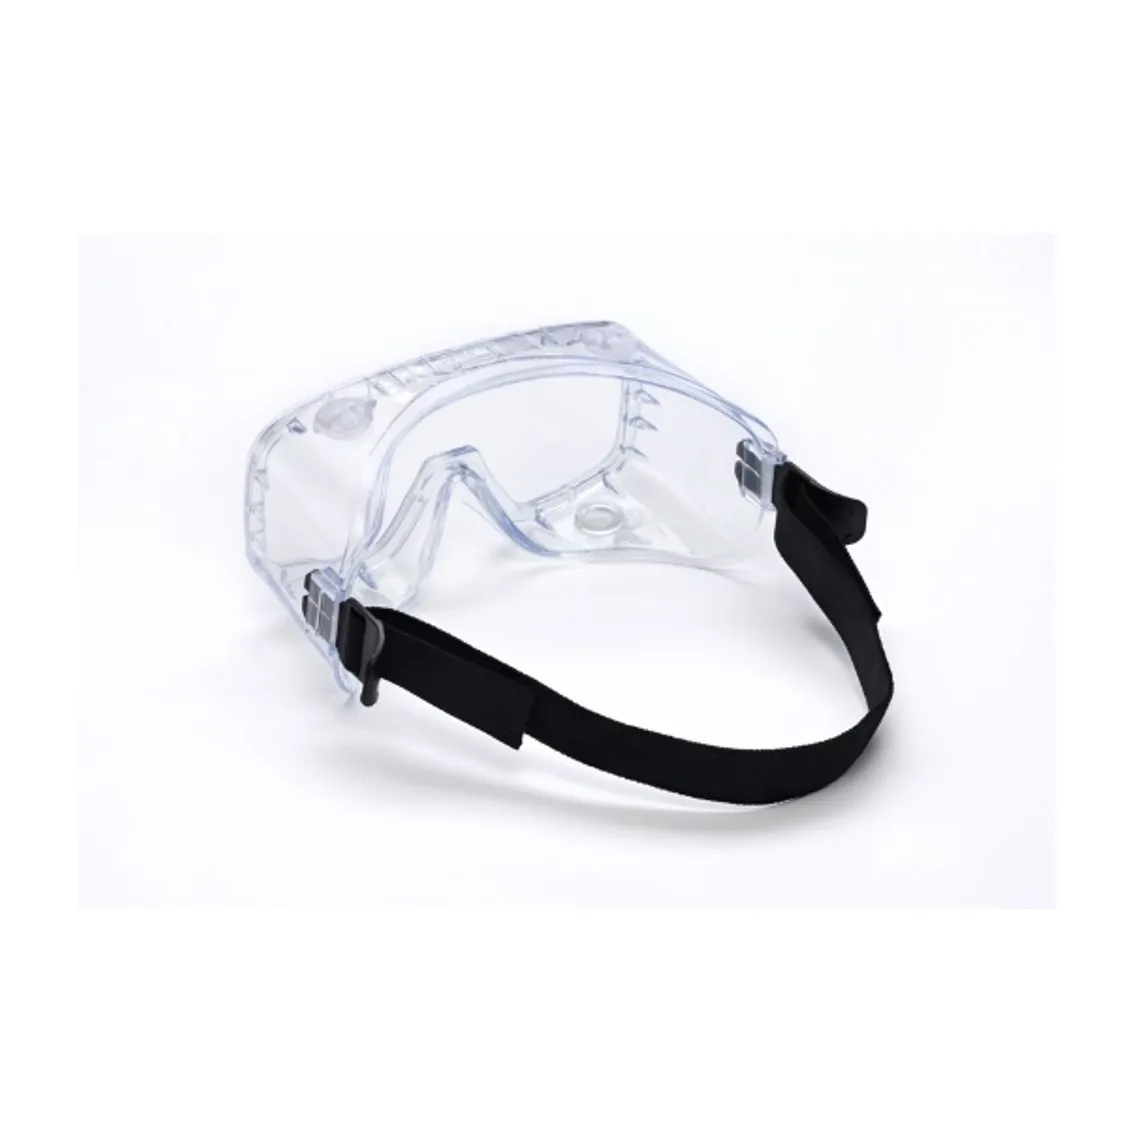 Borjye J168 uv protection medical surgical plastic safety goggles eyewear